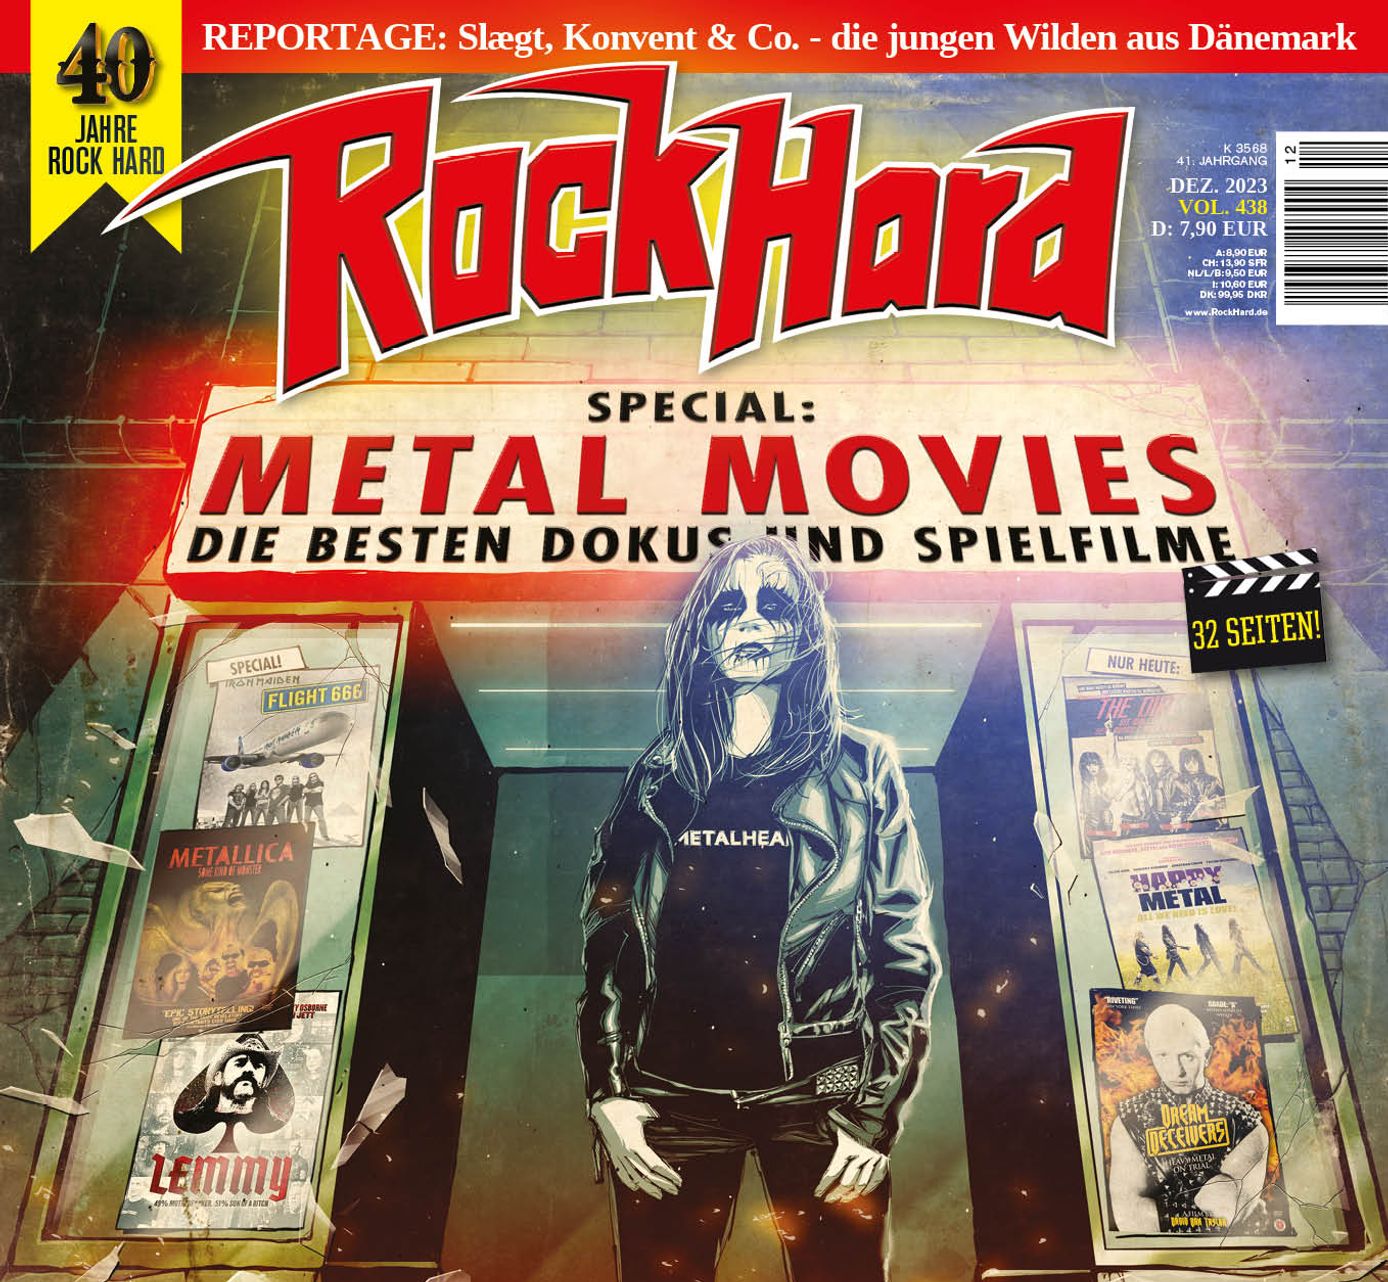 Rock Hard Vol. 438